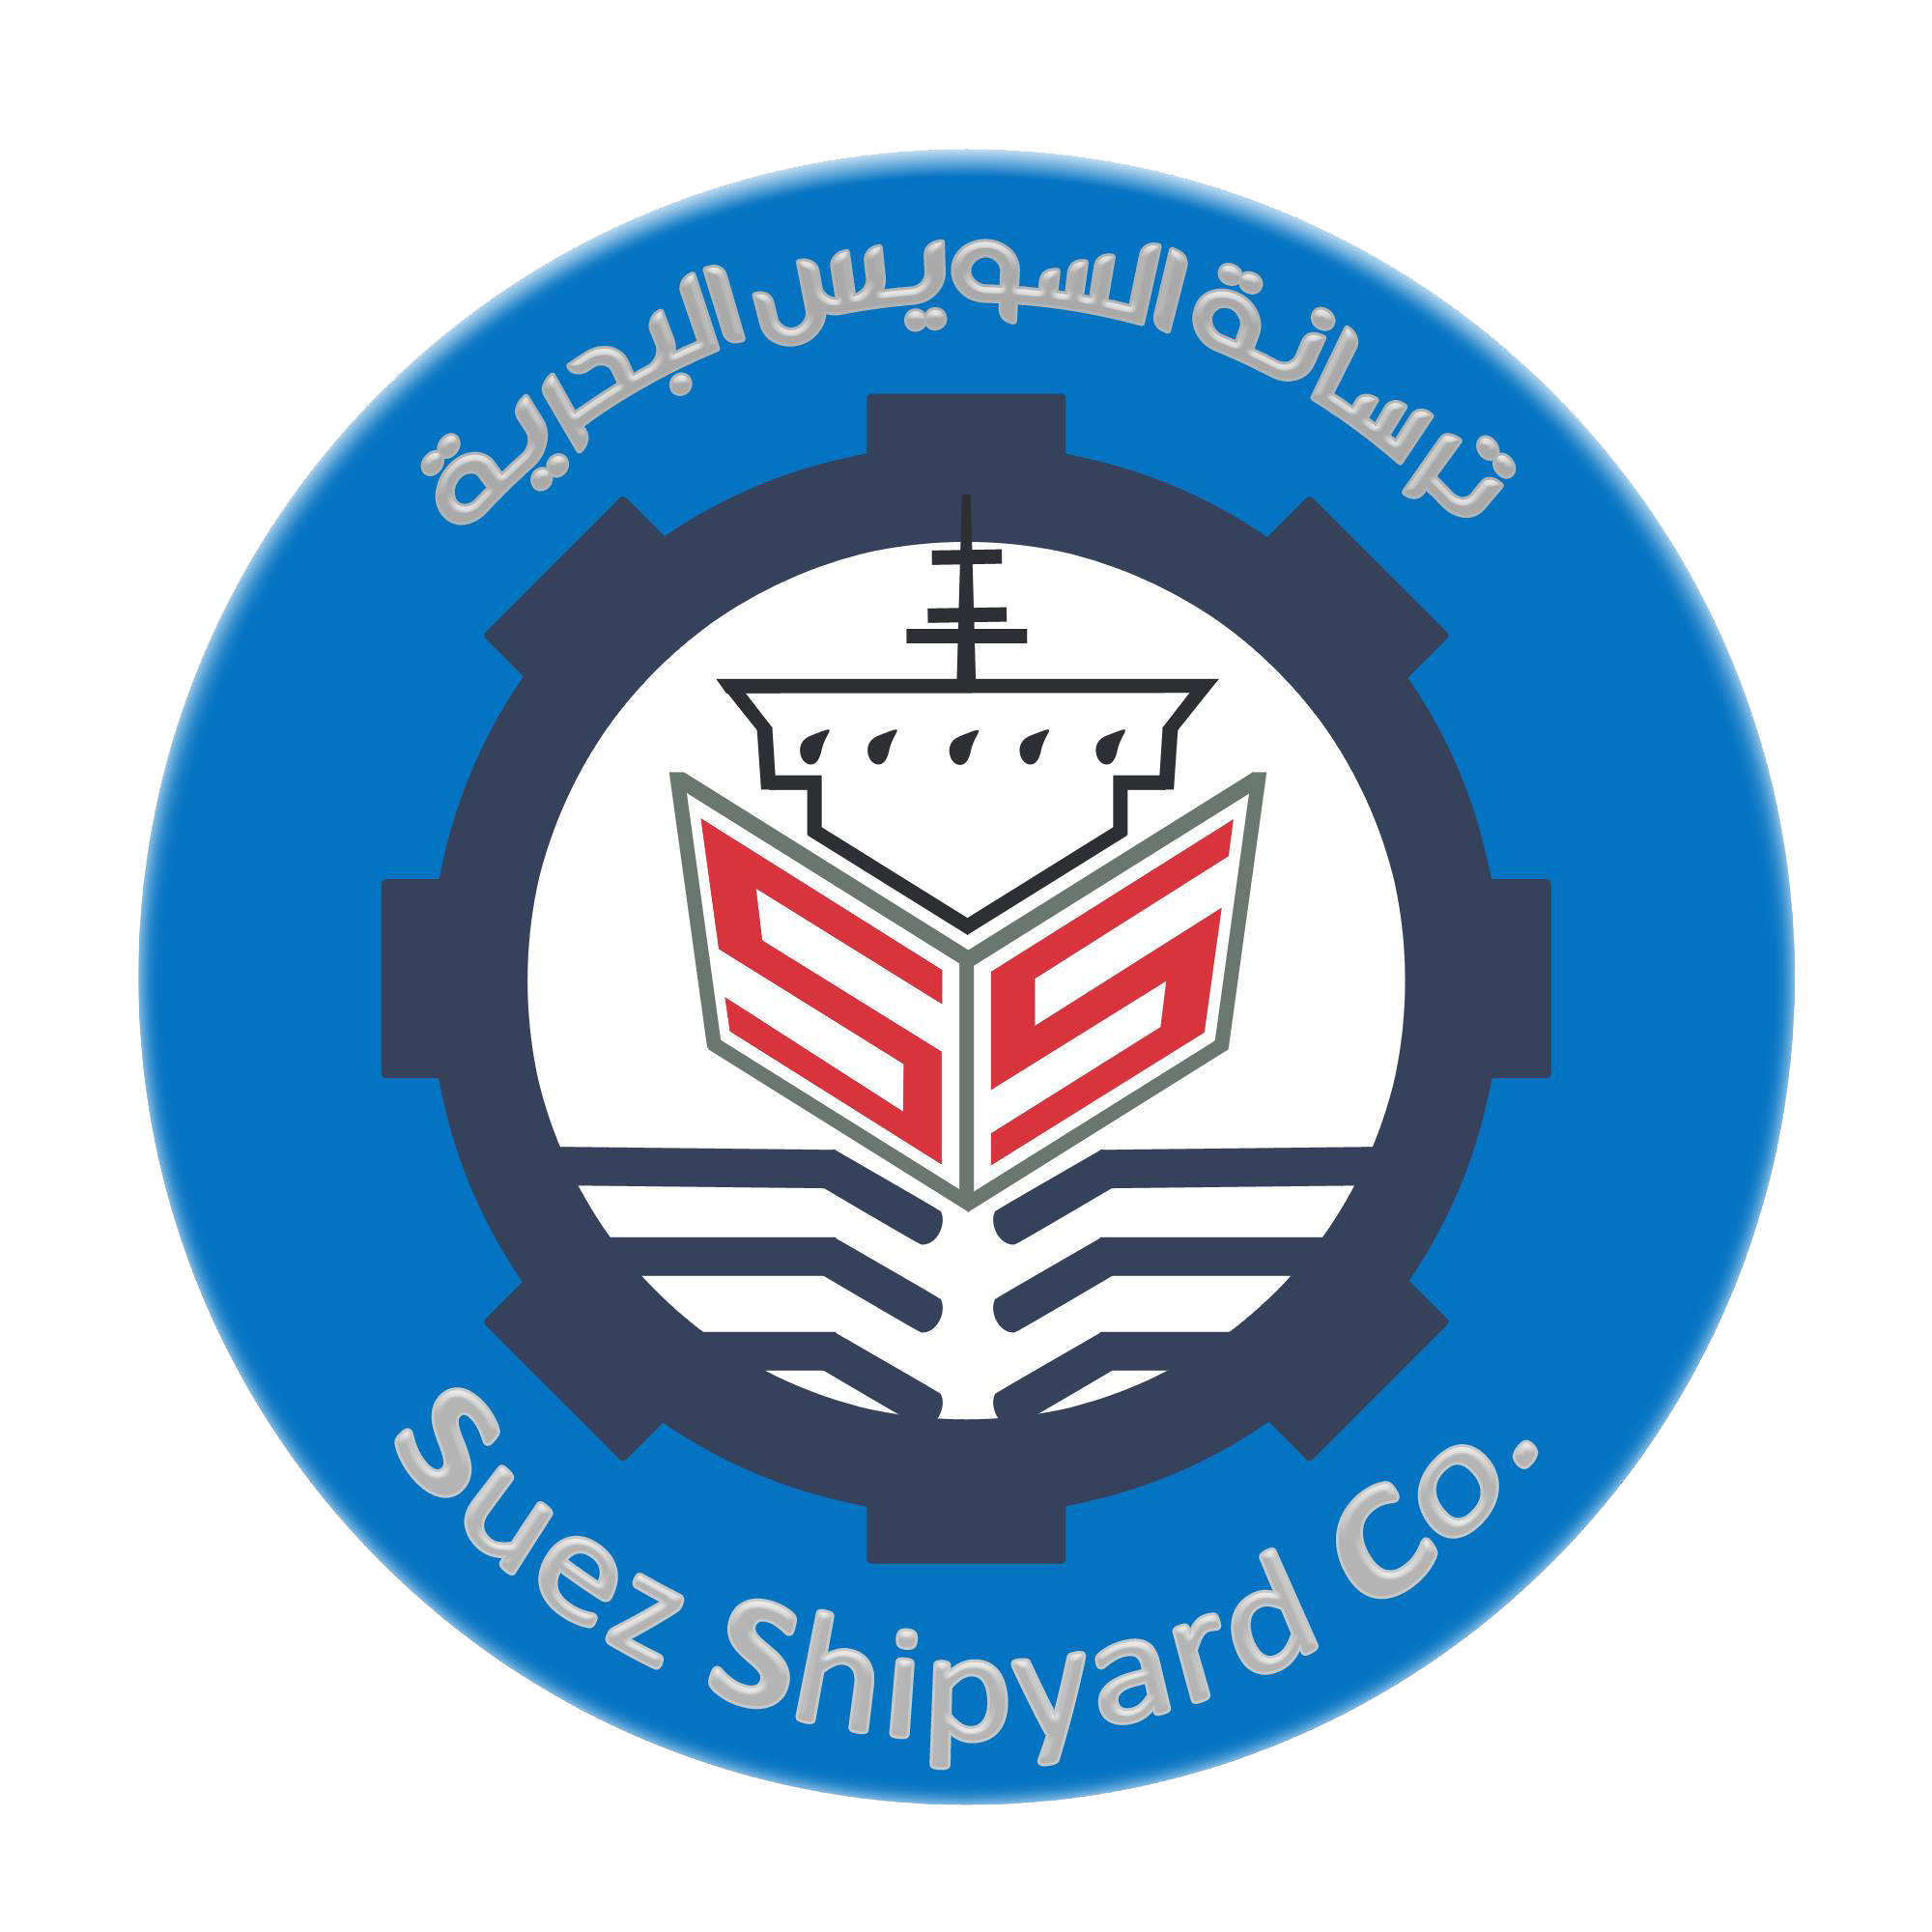 Suez Shipyard